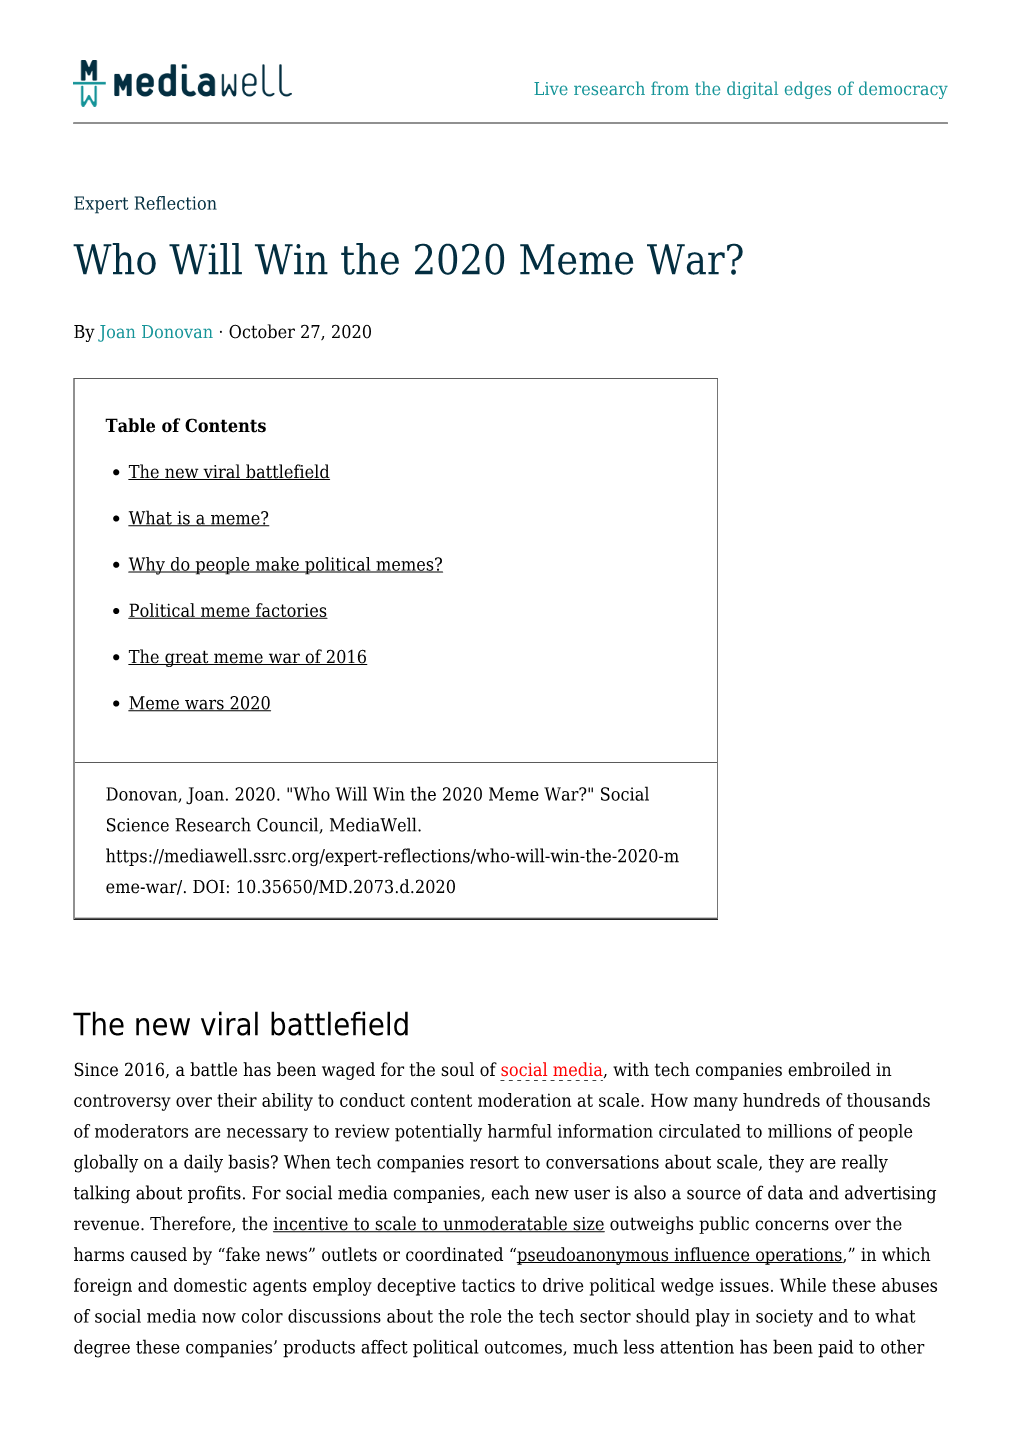 Who Will Win the 2020 Meme War?